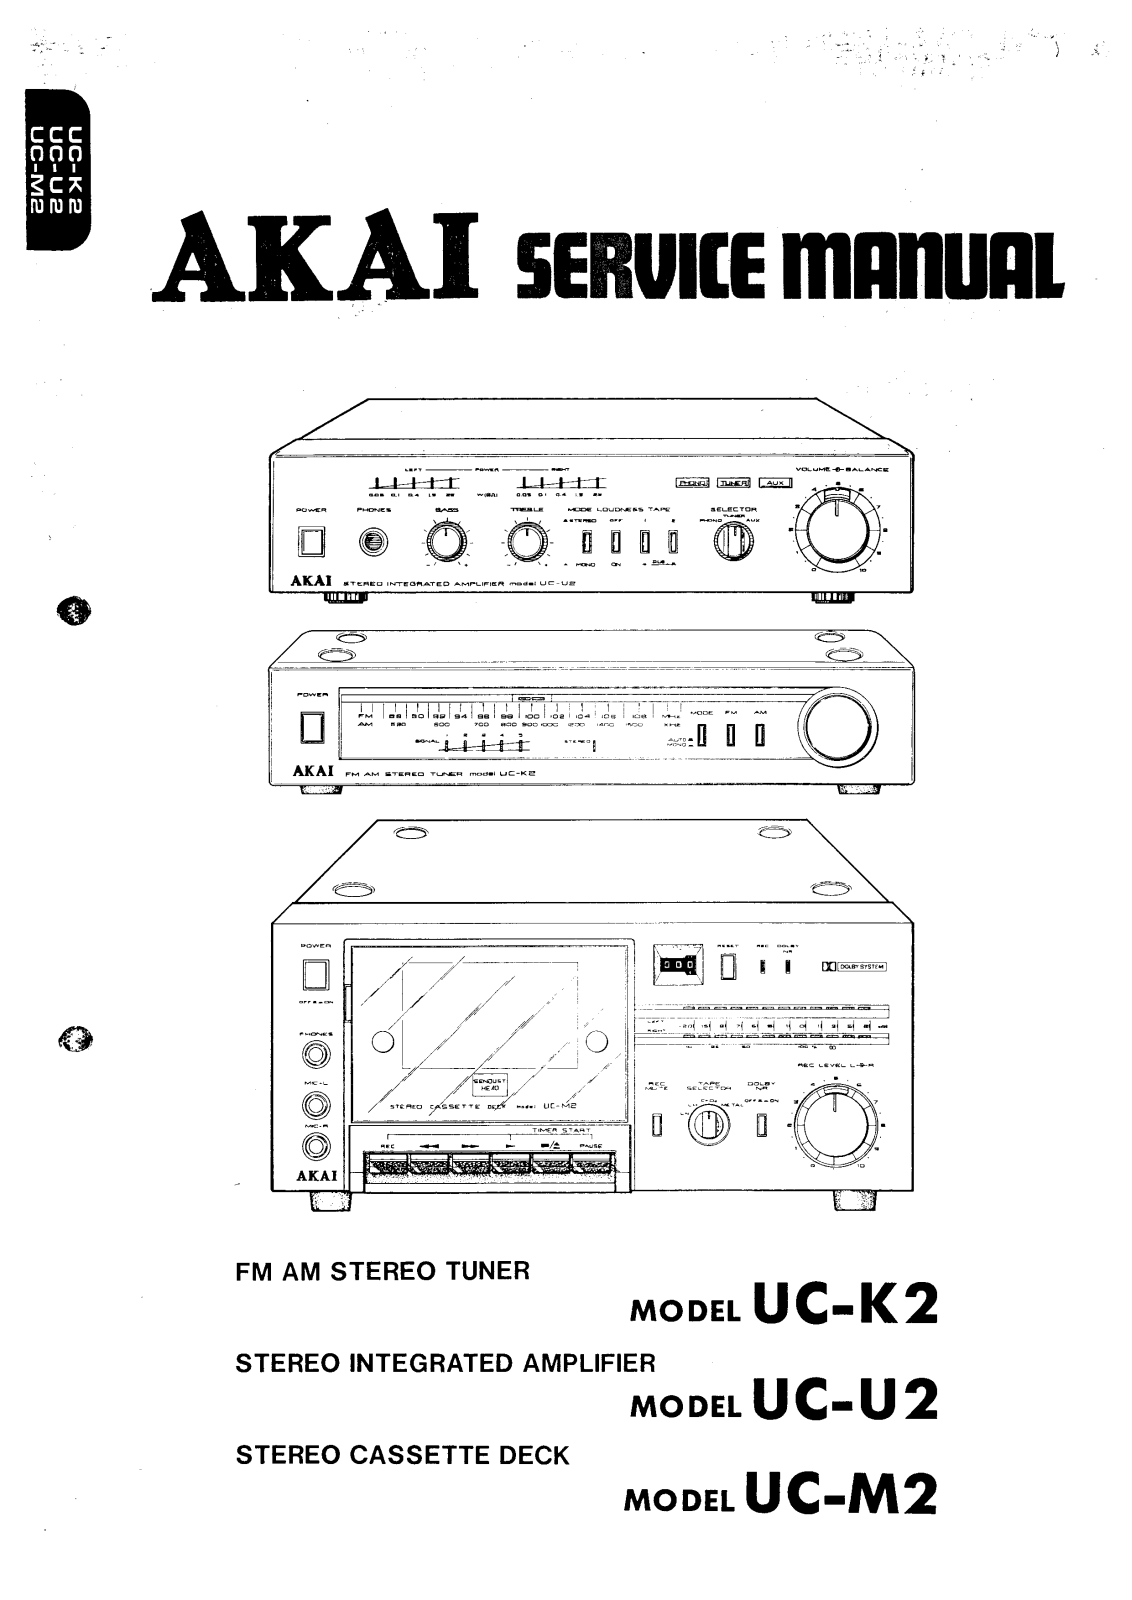 Akai UCM-2, UCK-2, UCU-2 Service Manual